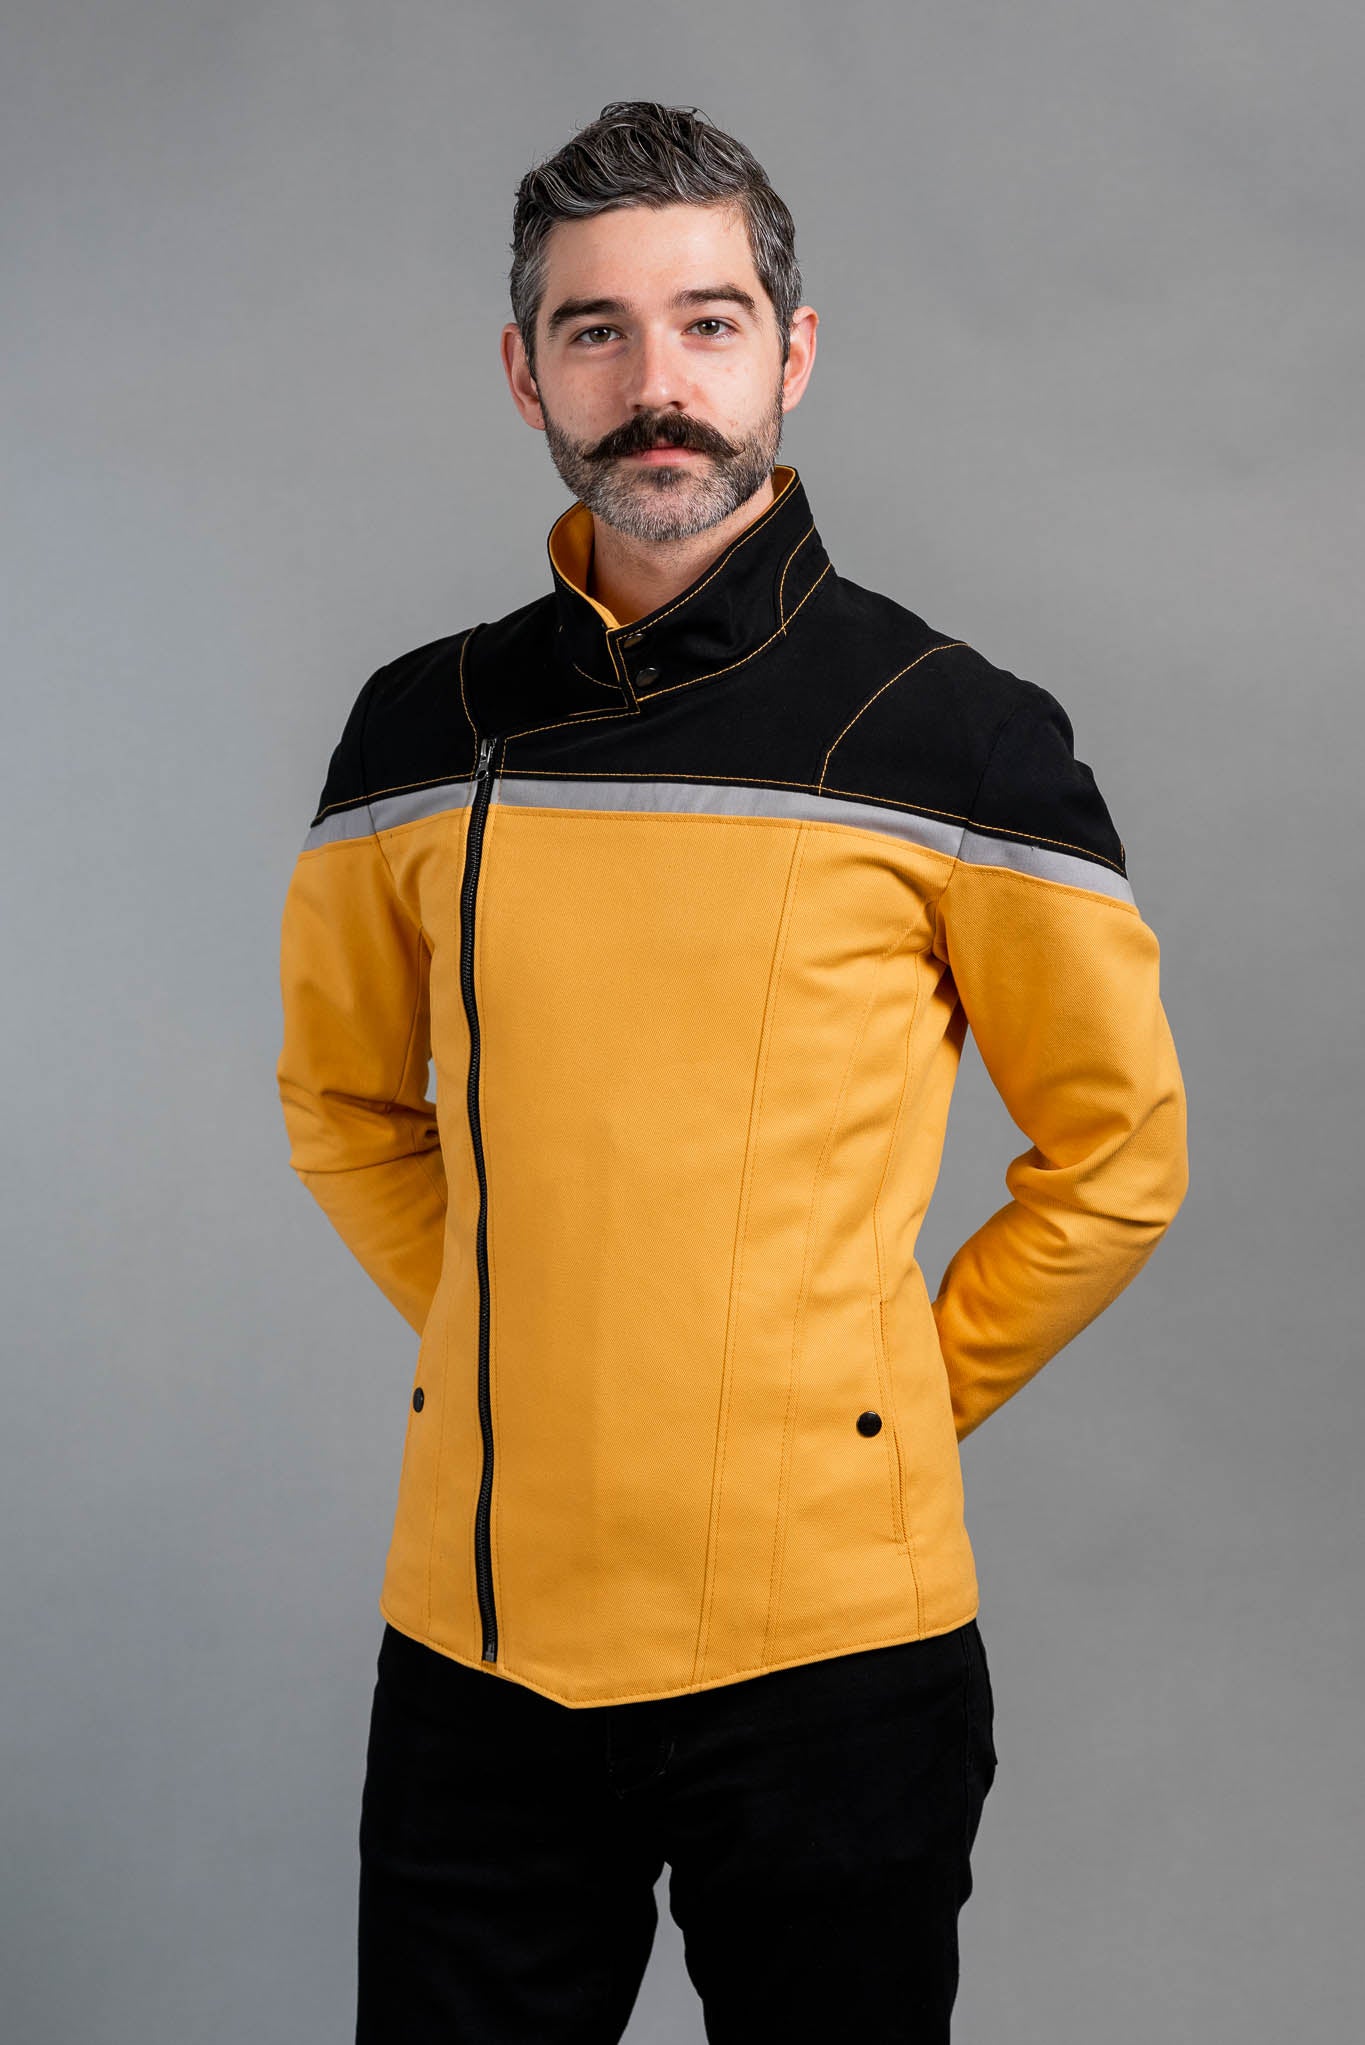 Starfleet 2380 - Operations Gold [Mens]